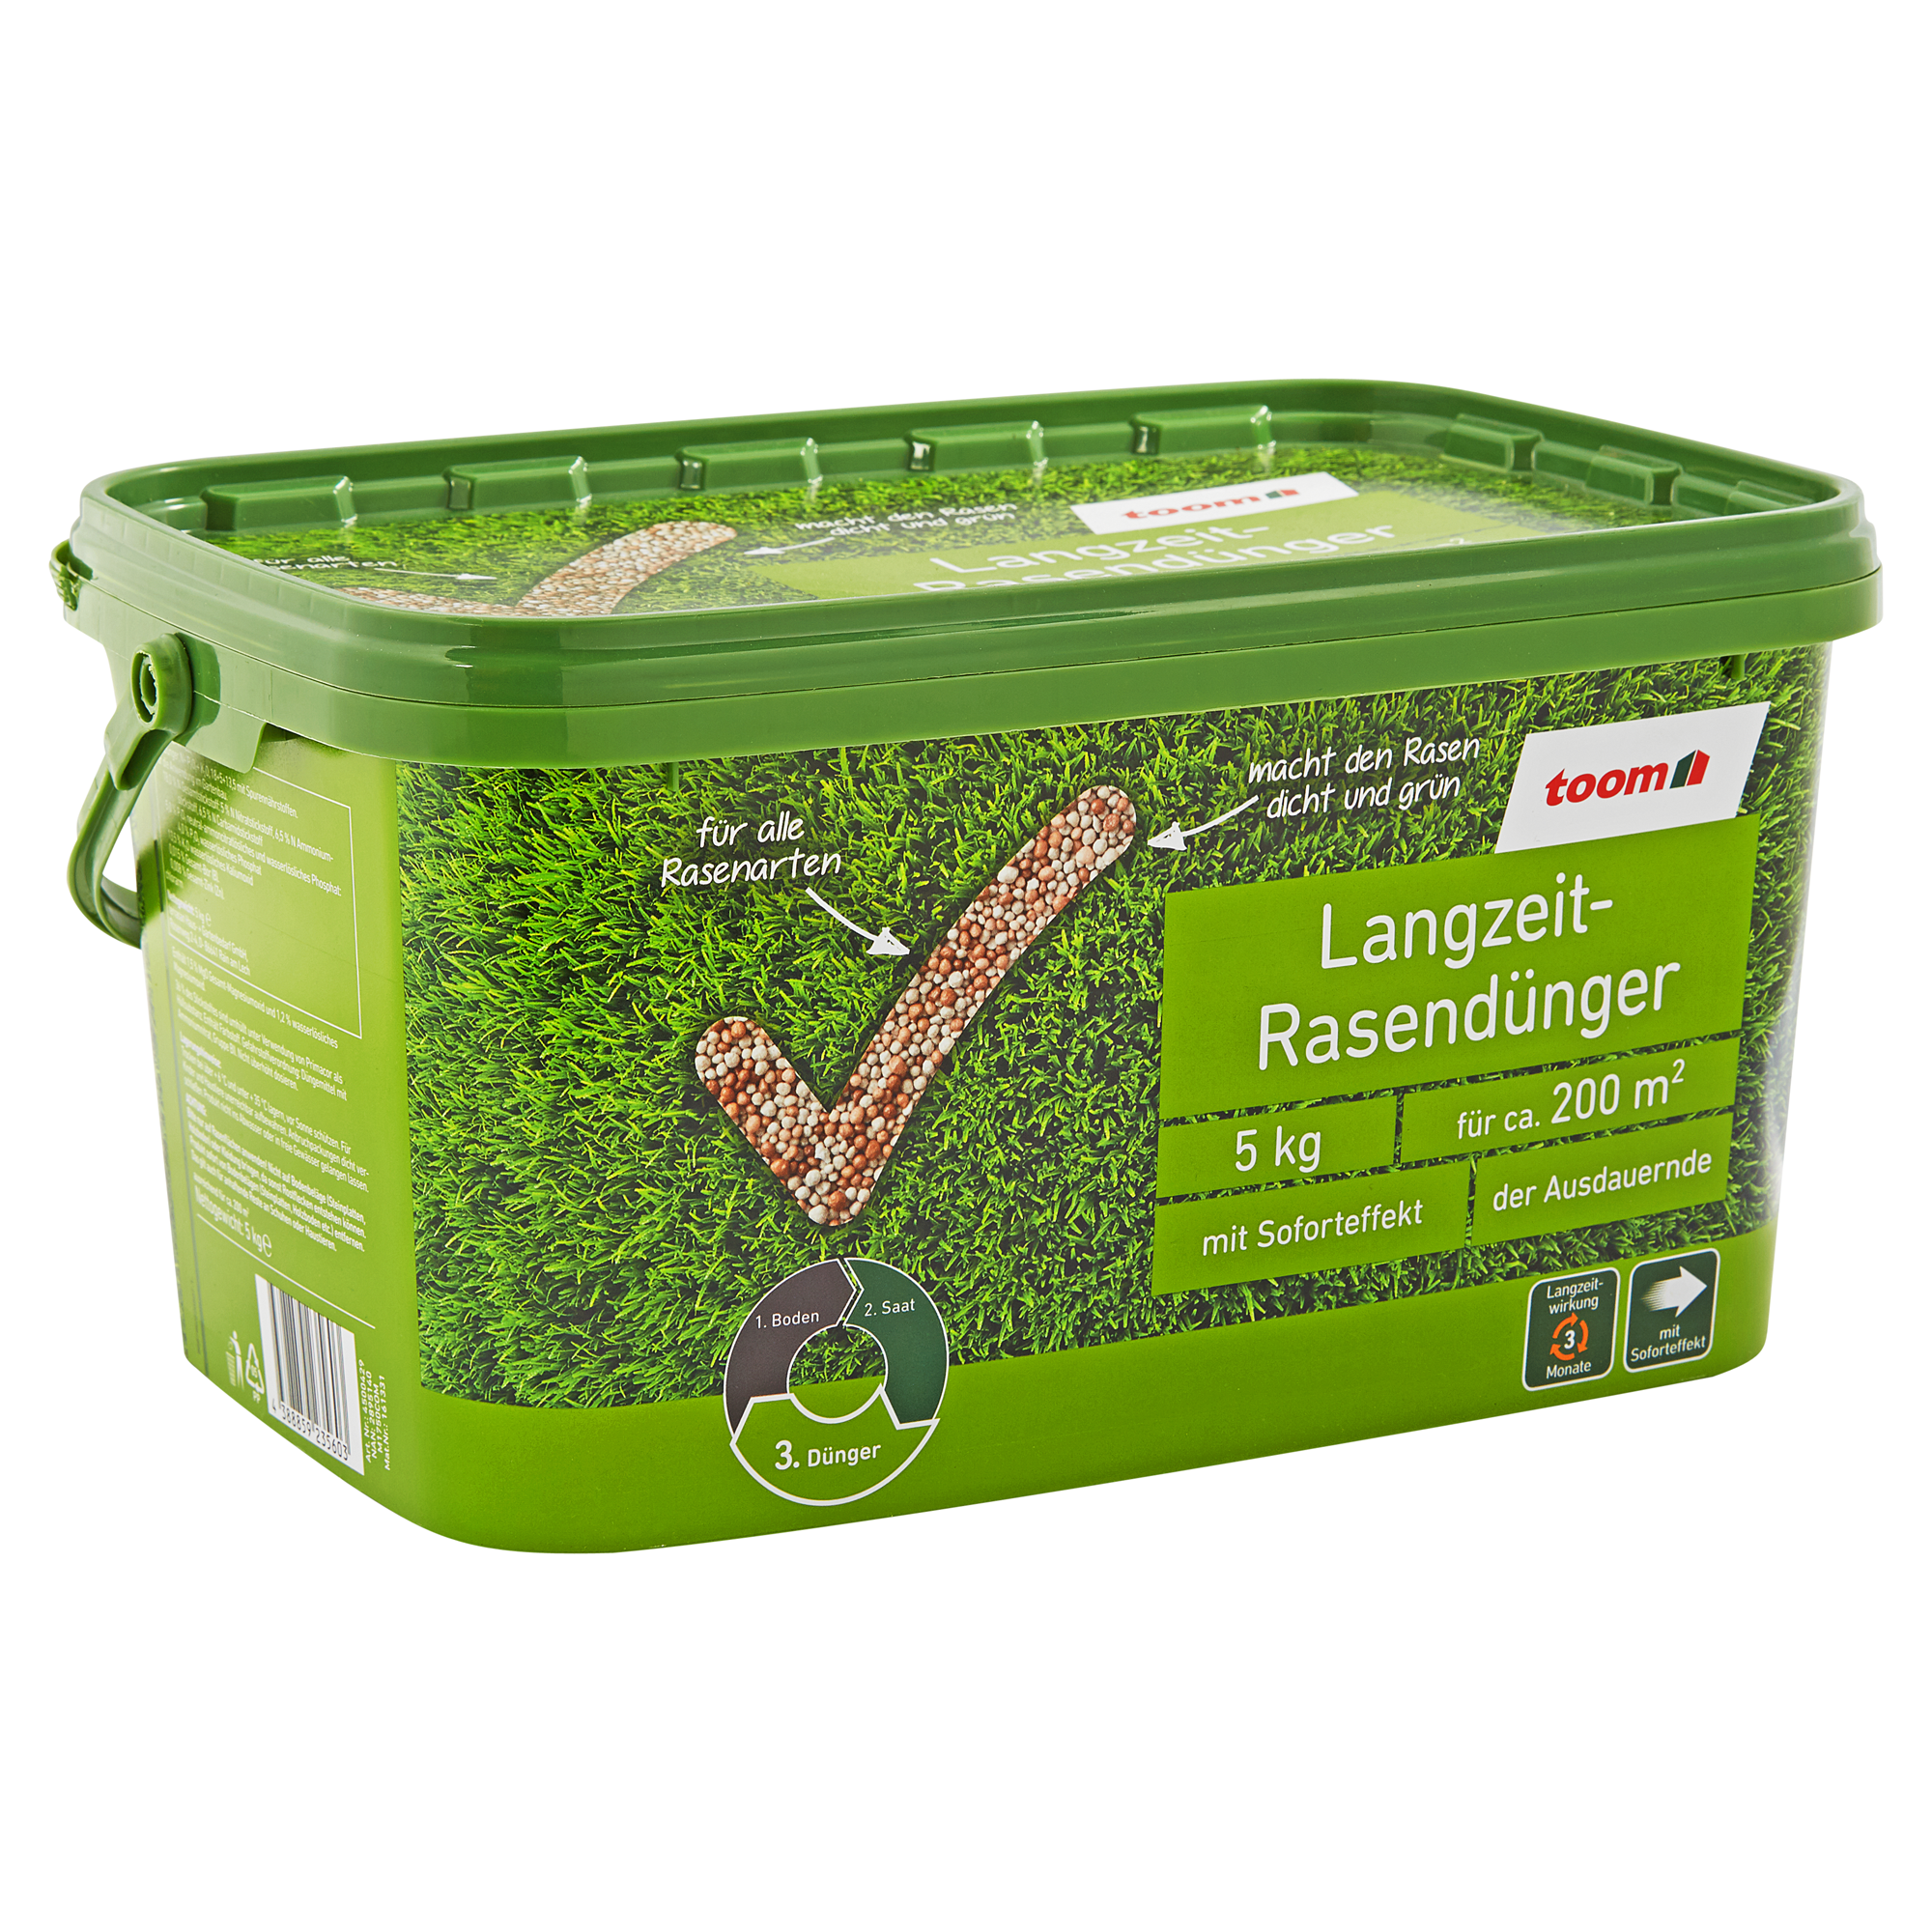 Langzeit-Rasendünger 5 kg + product picture